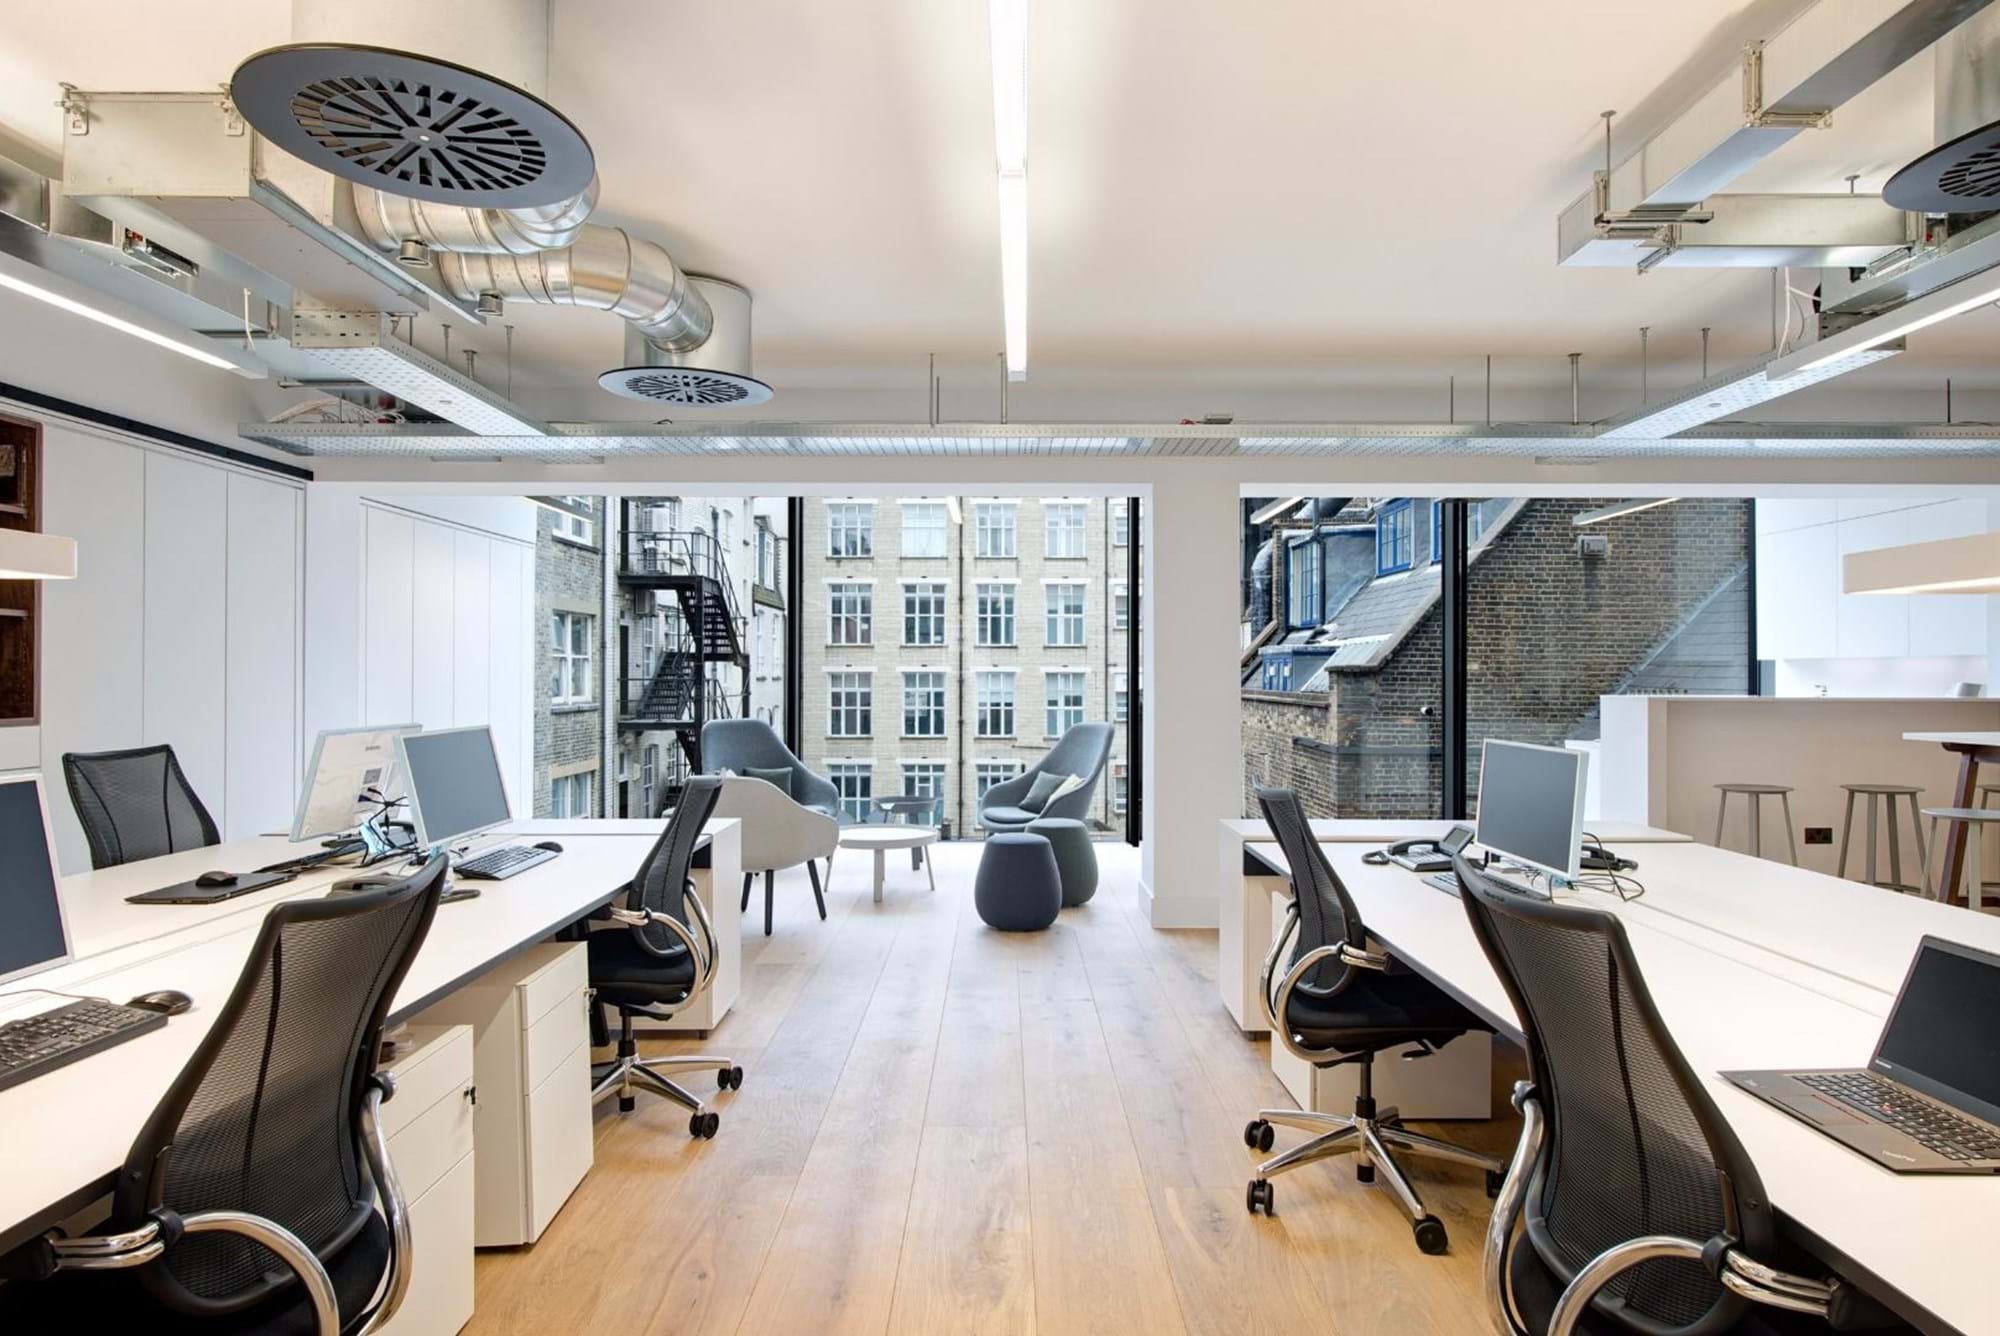 Modus Workspace office design, fit out and refurbishment - Craigewan - Graigewan 09 highres sRGB.jpg